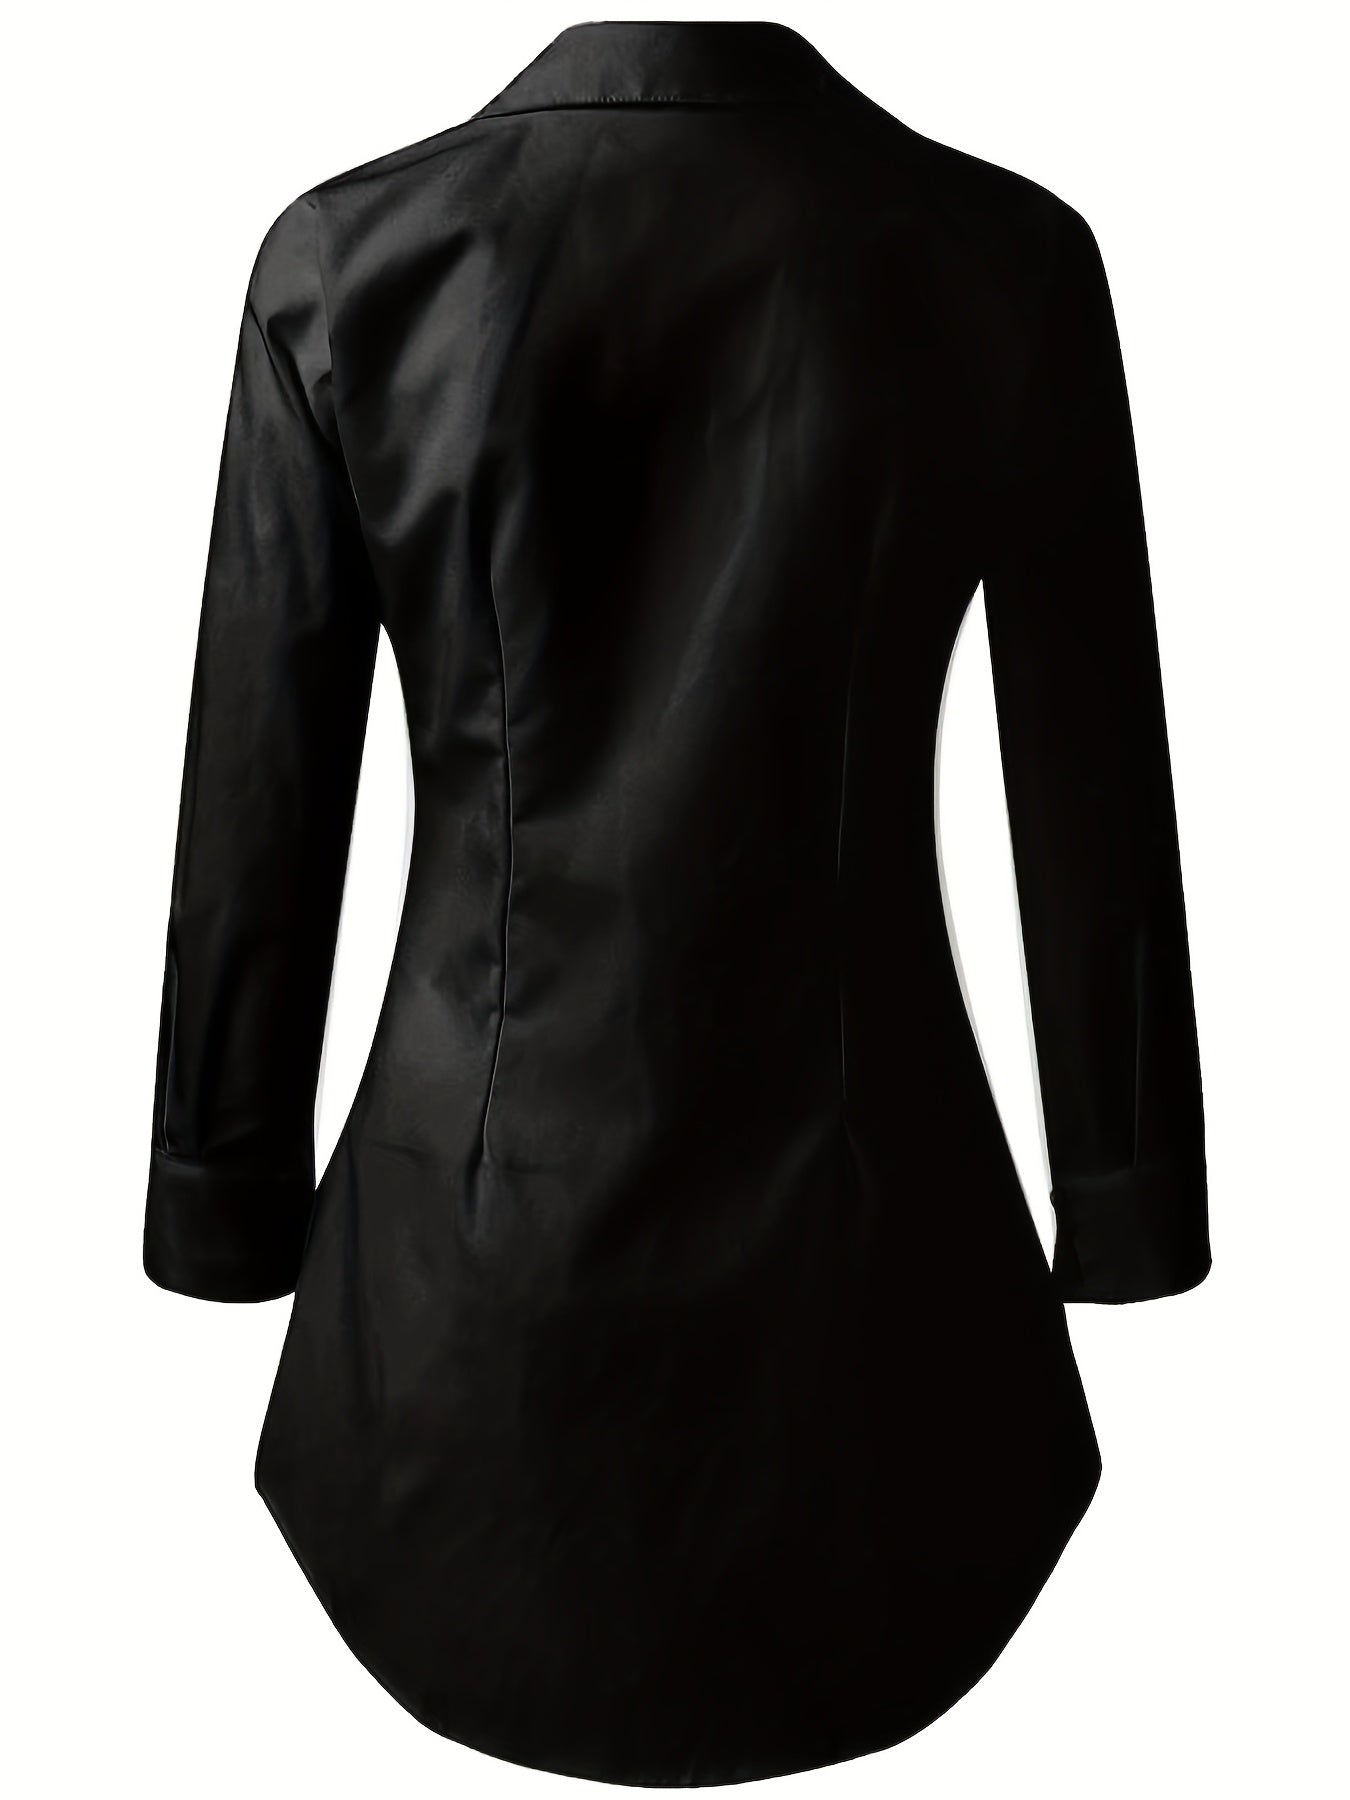 Plus Size Elegant Blouse, Women's Plus Solid Long Sleeve Turn Down Collar Button Up Shirt